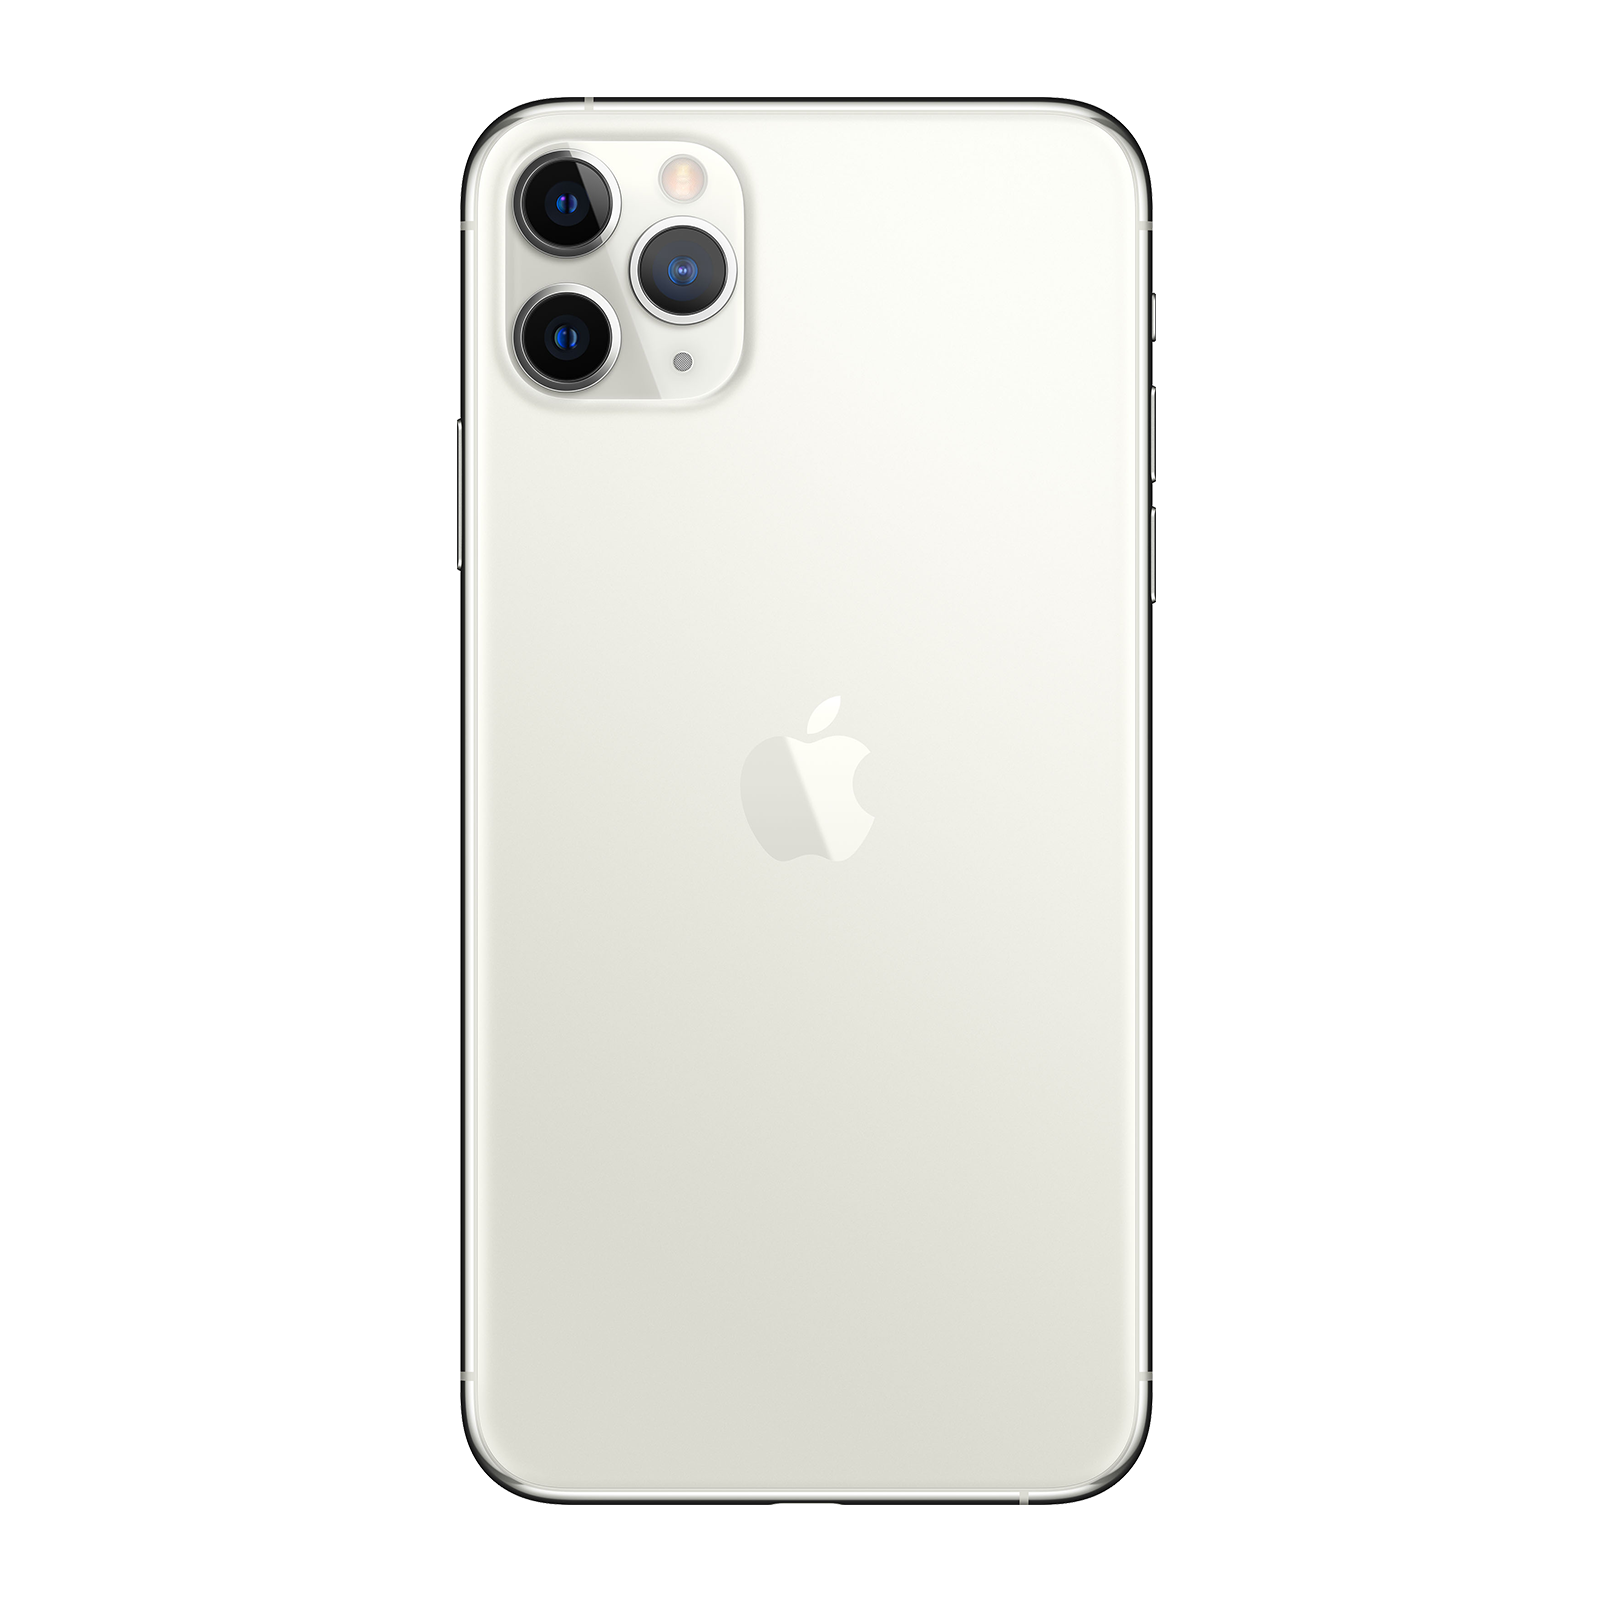 Apple iPhone 11 Pro 512GB Silver Very Good - Unlocked